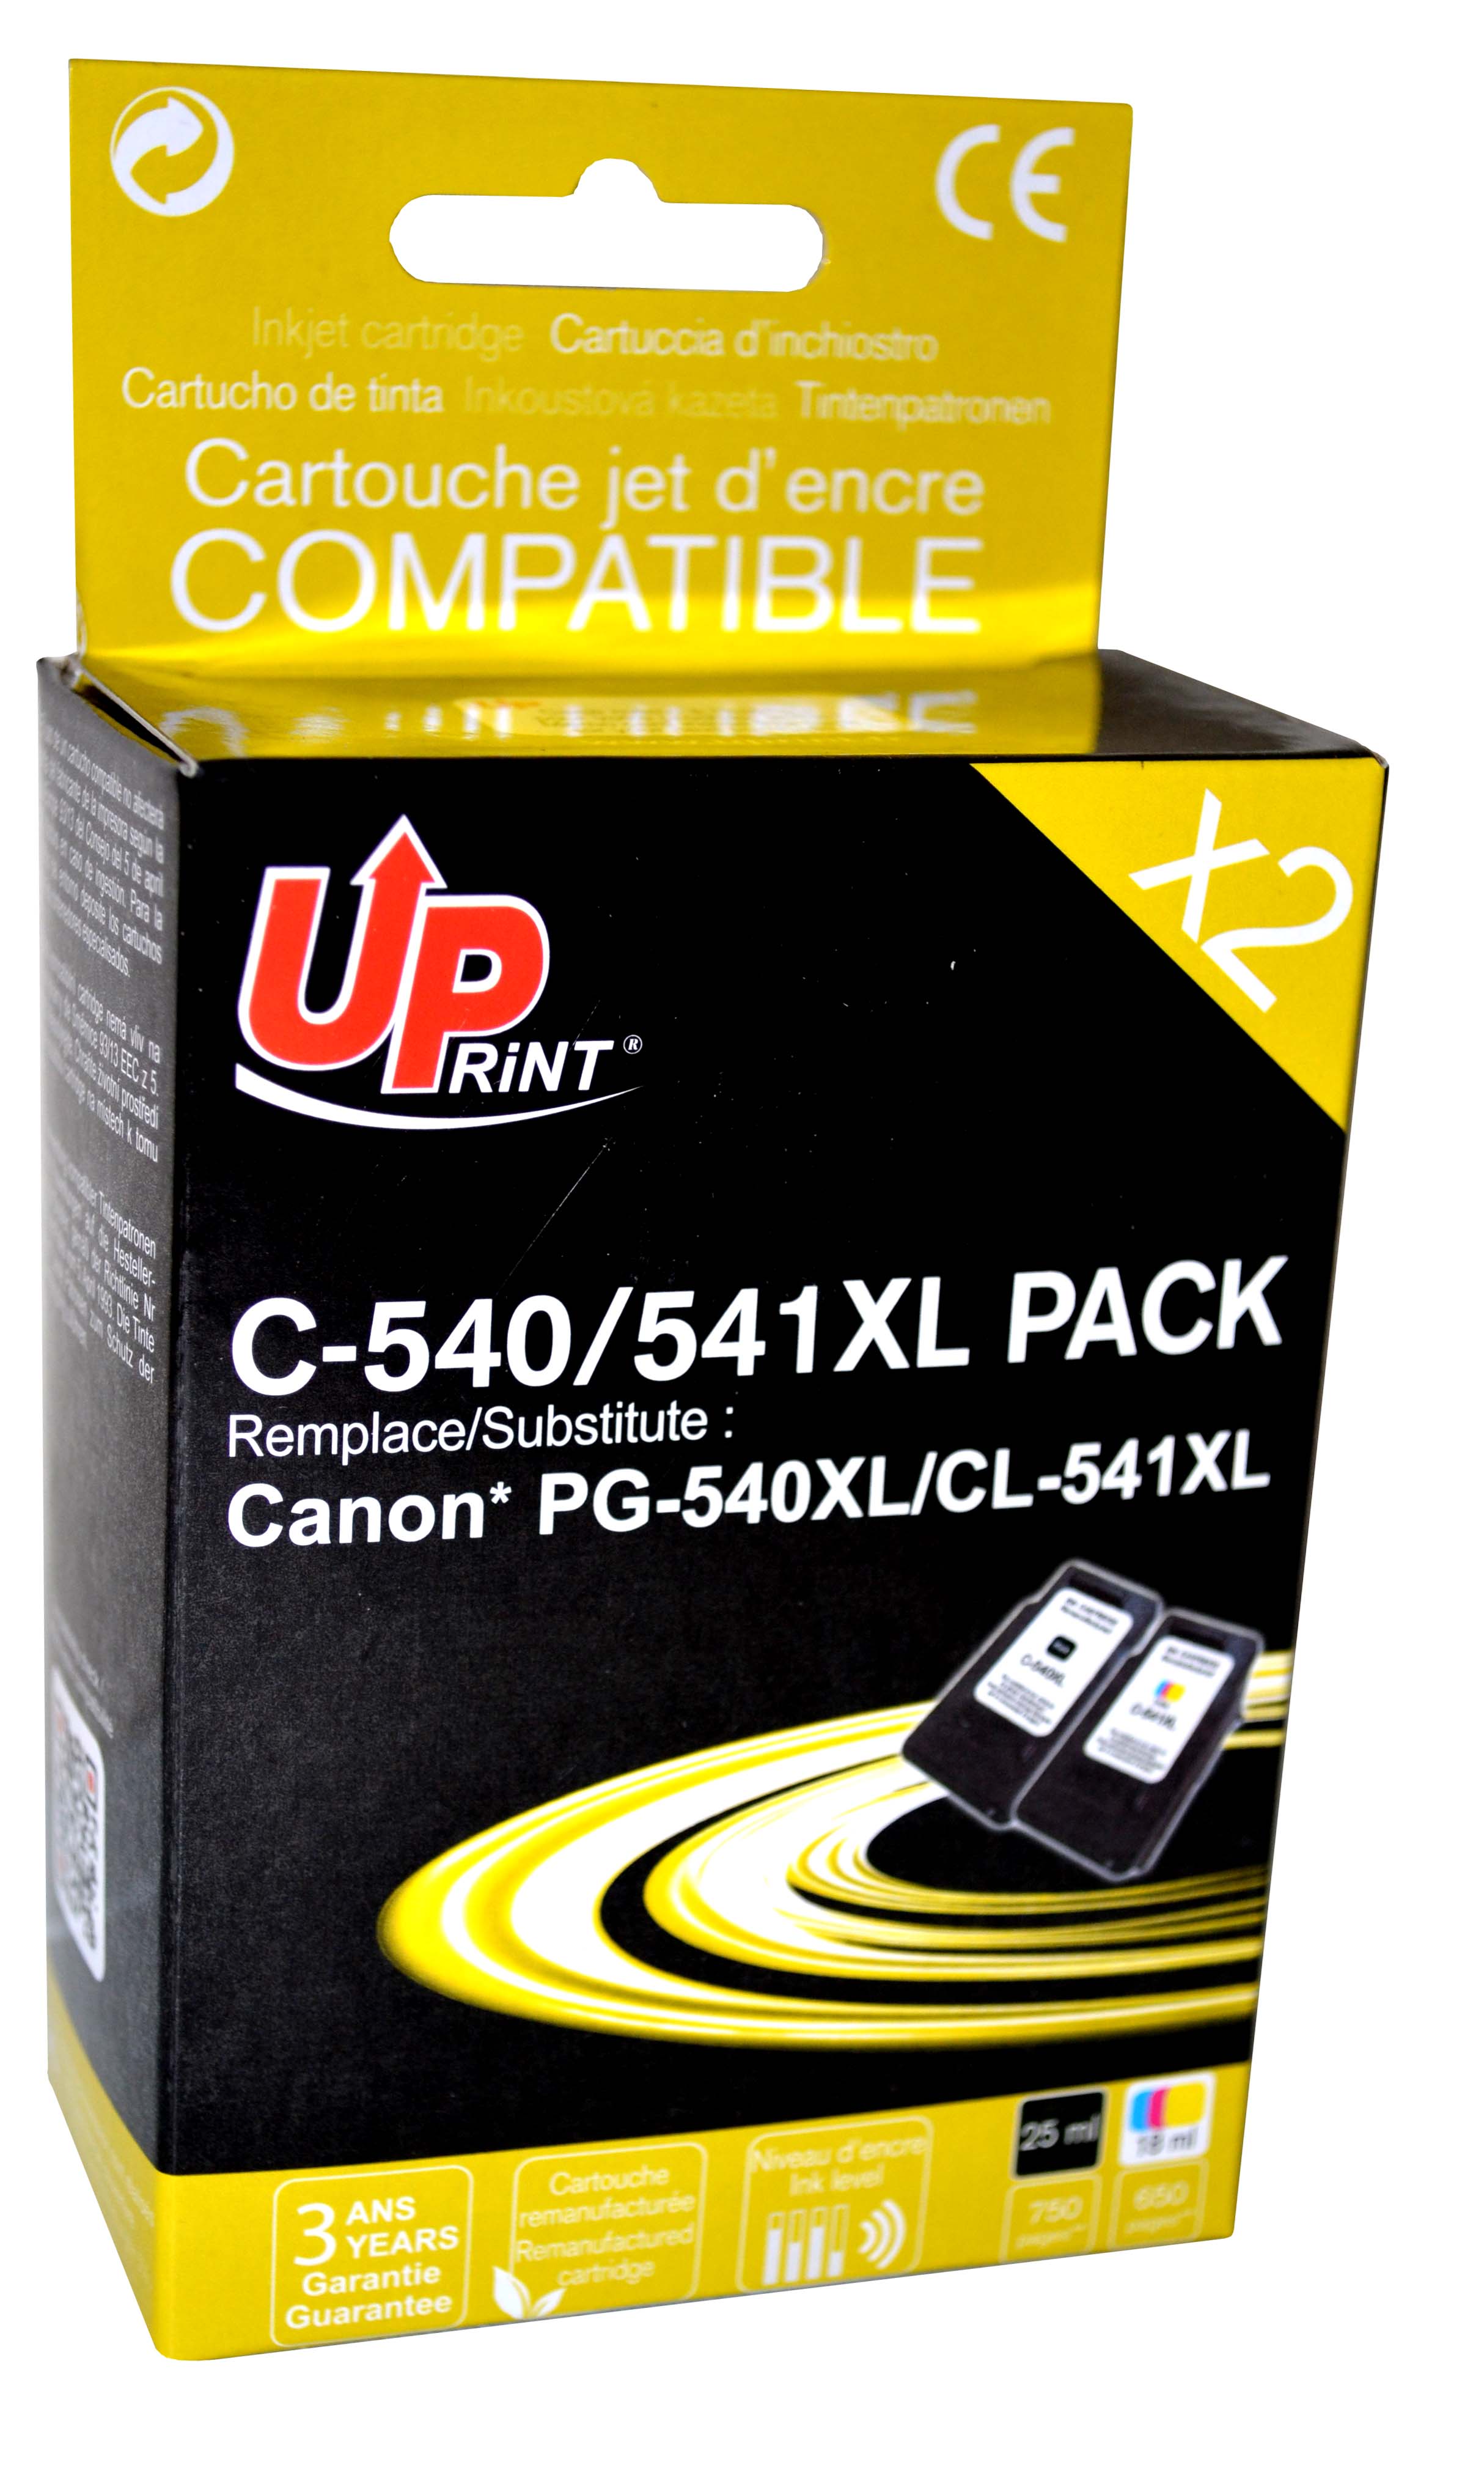 Cartouches Encre Imprimante CANON Multipass c - 545